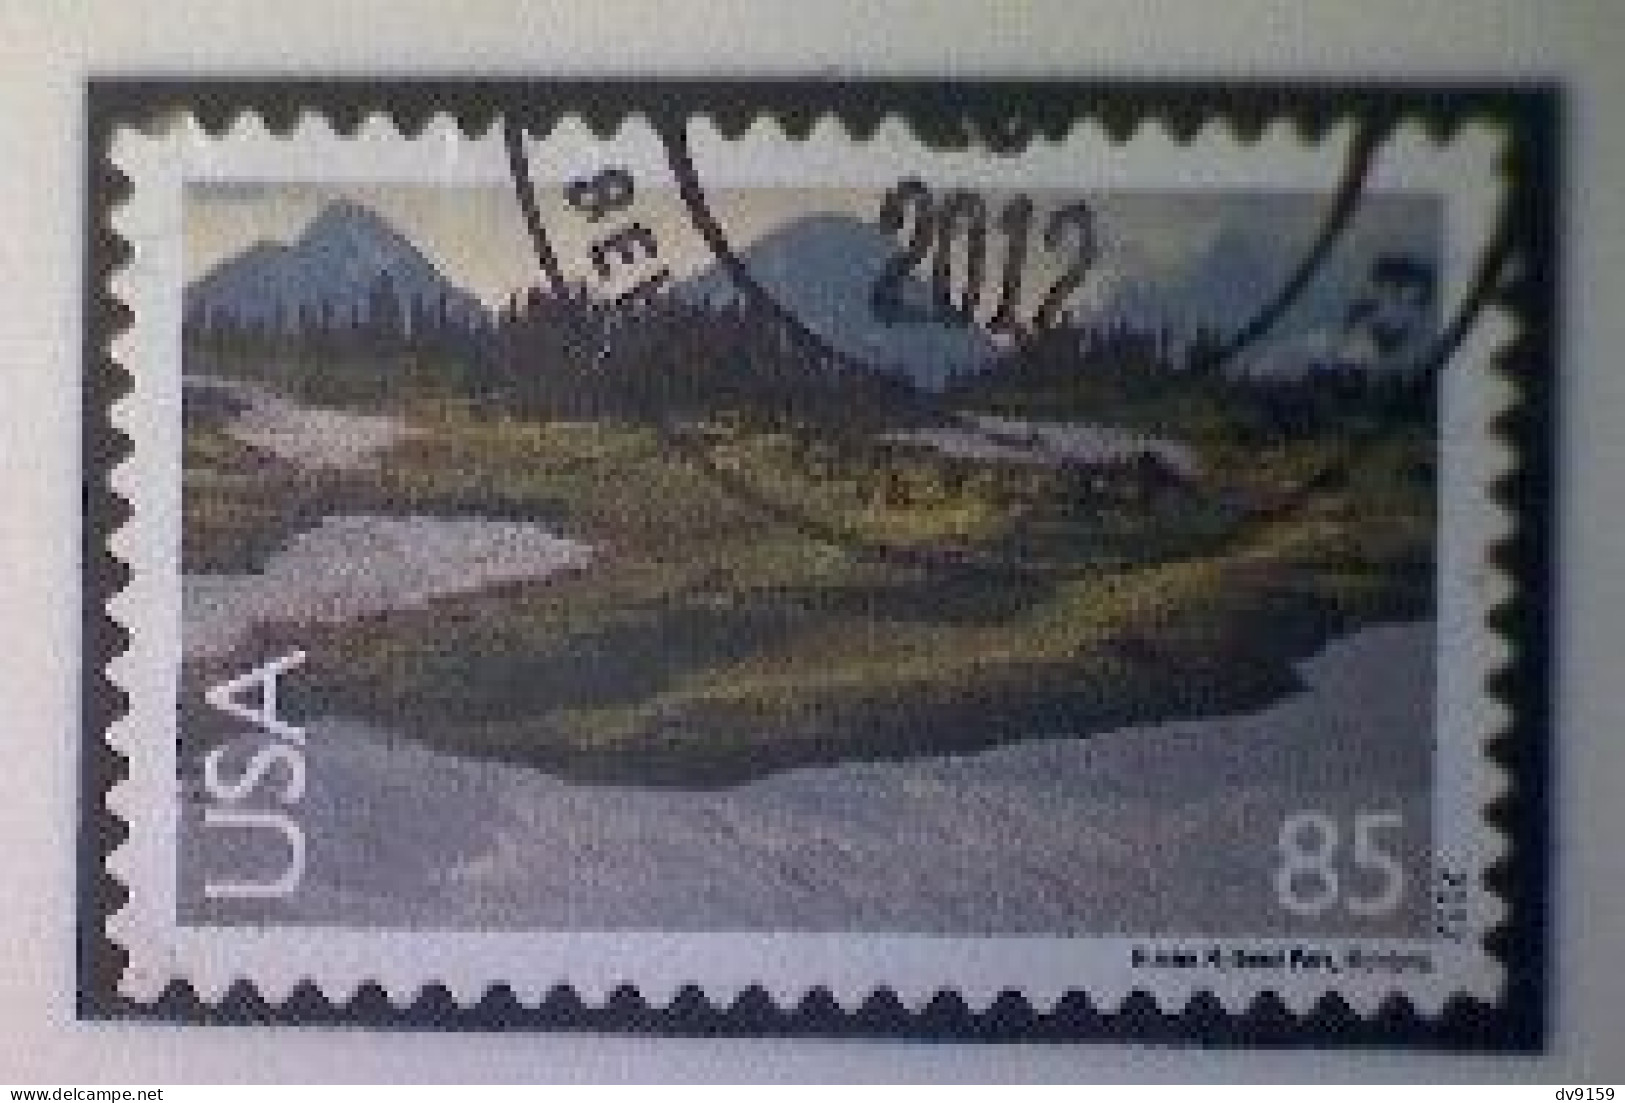 United States, Scott #C149, Used(o), 2012 Air Mail, Glacier Park, 85¢, Multicolored - Usados